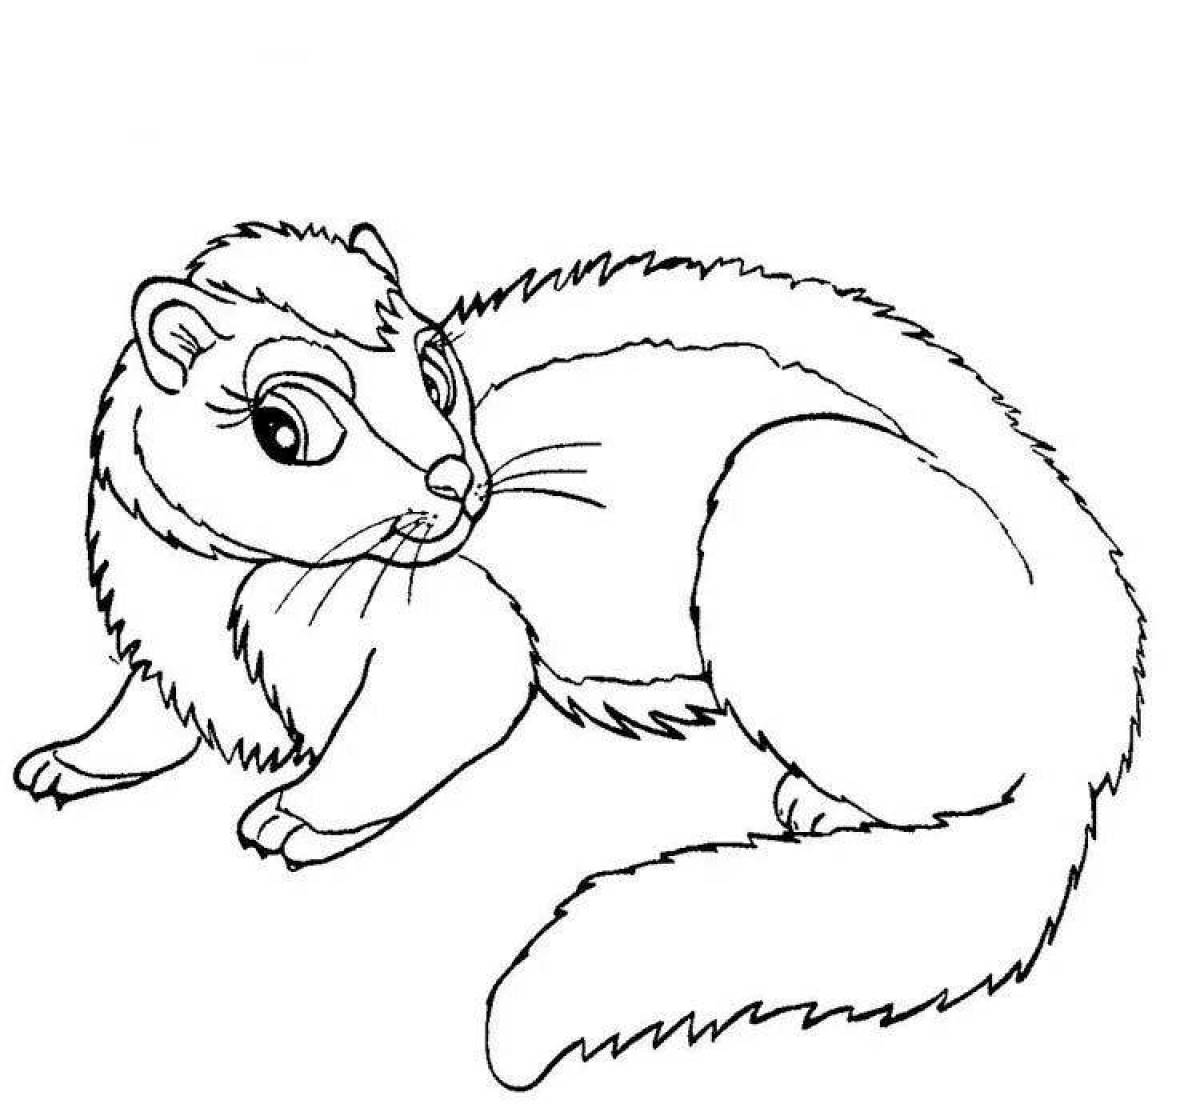 Fancy ferret coloring for kids